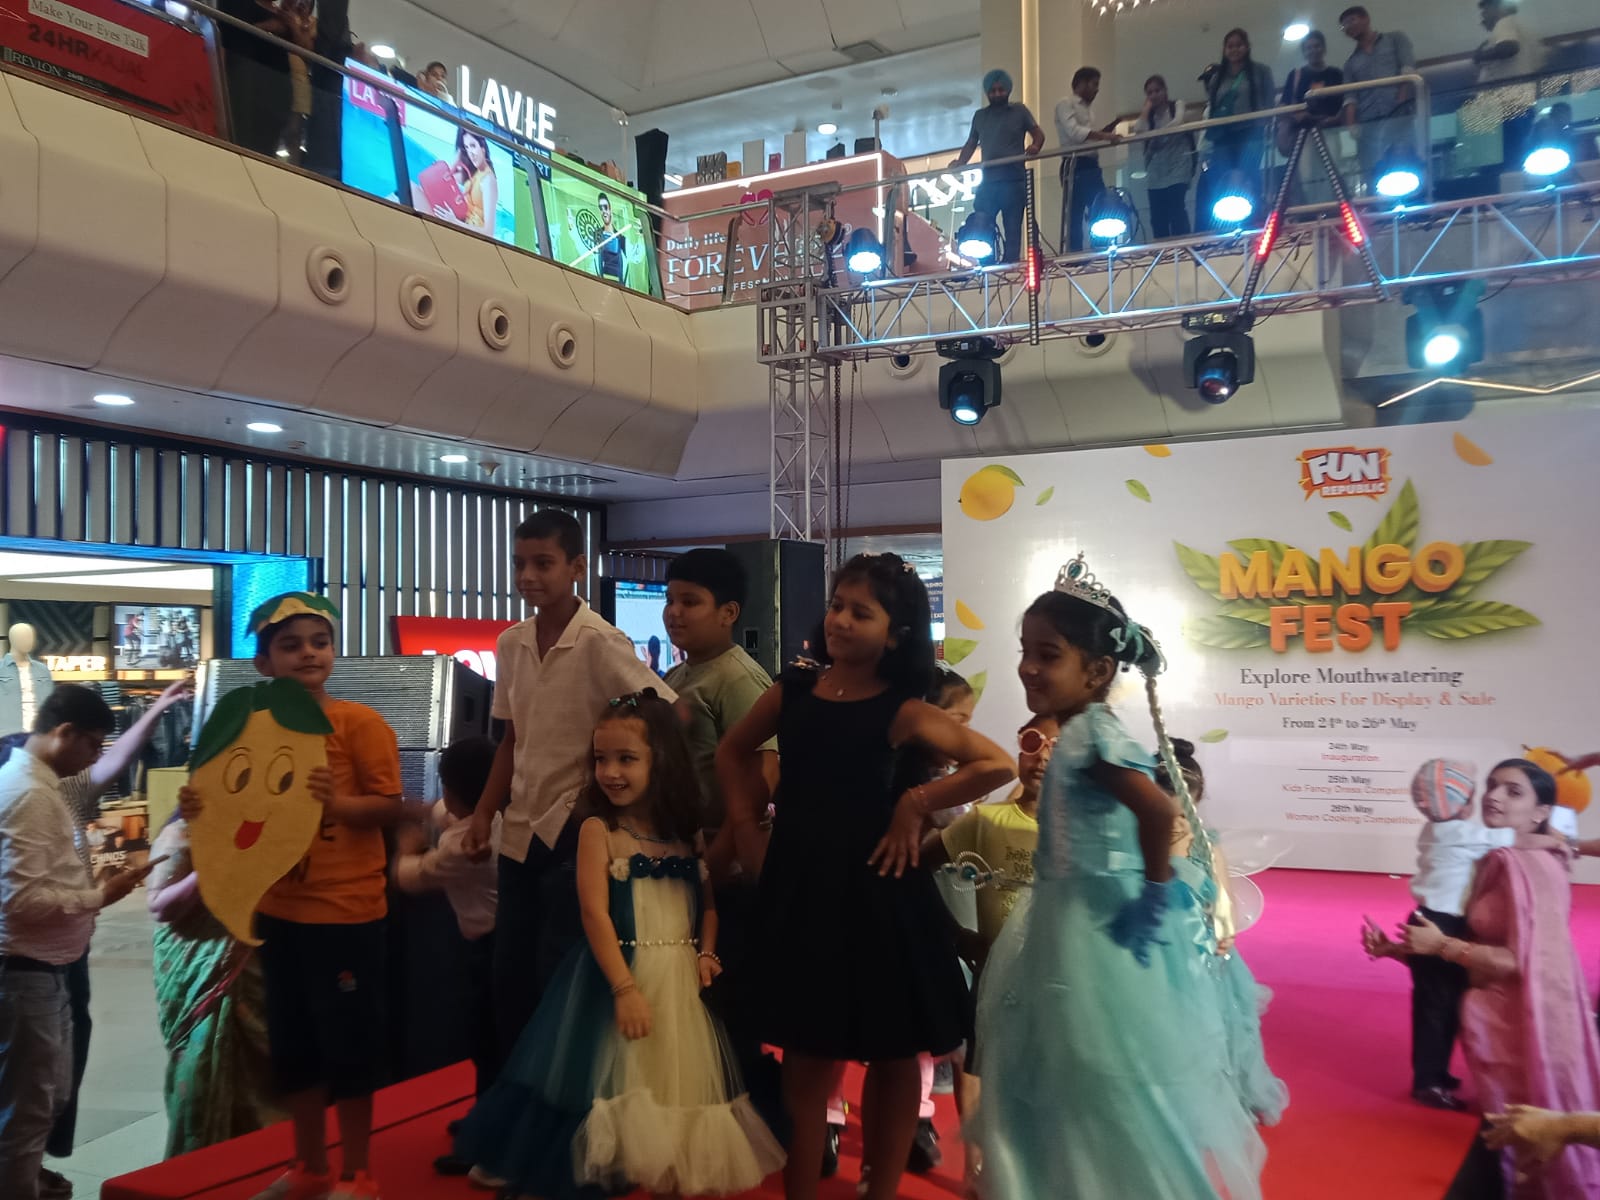 Mango Festival started in Fun Republic Mall